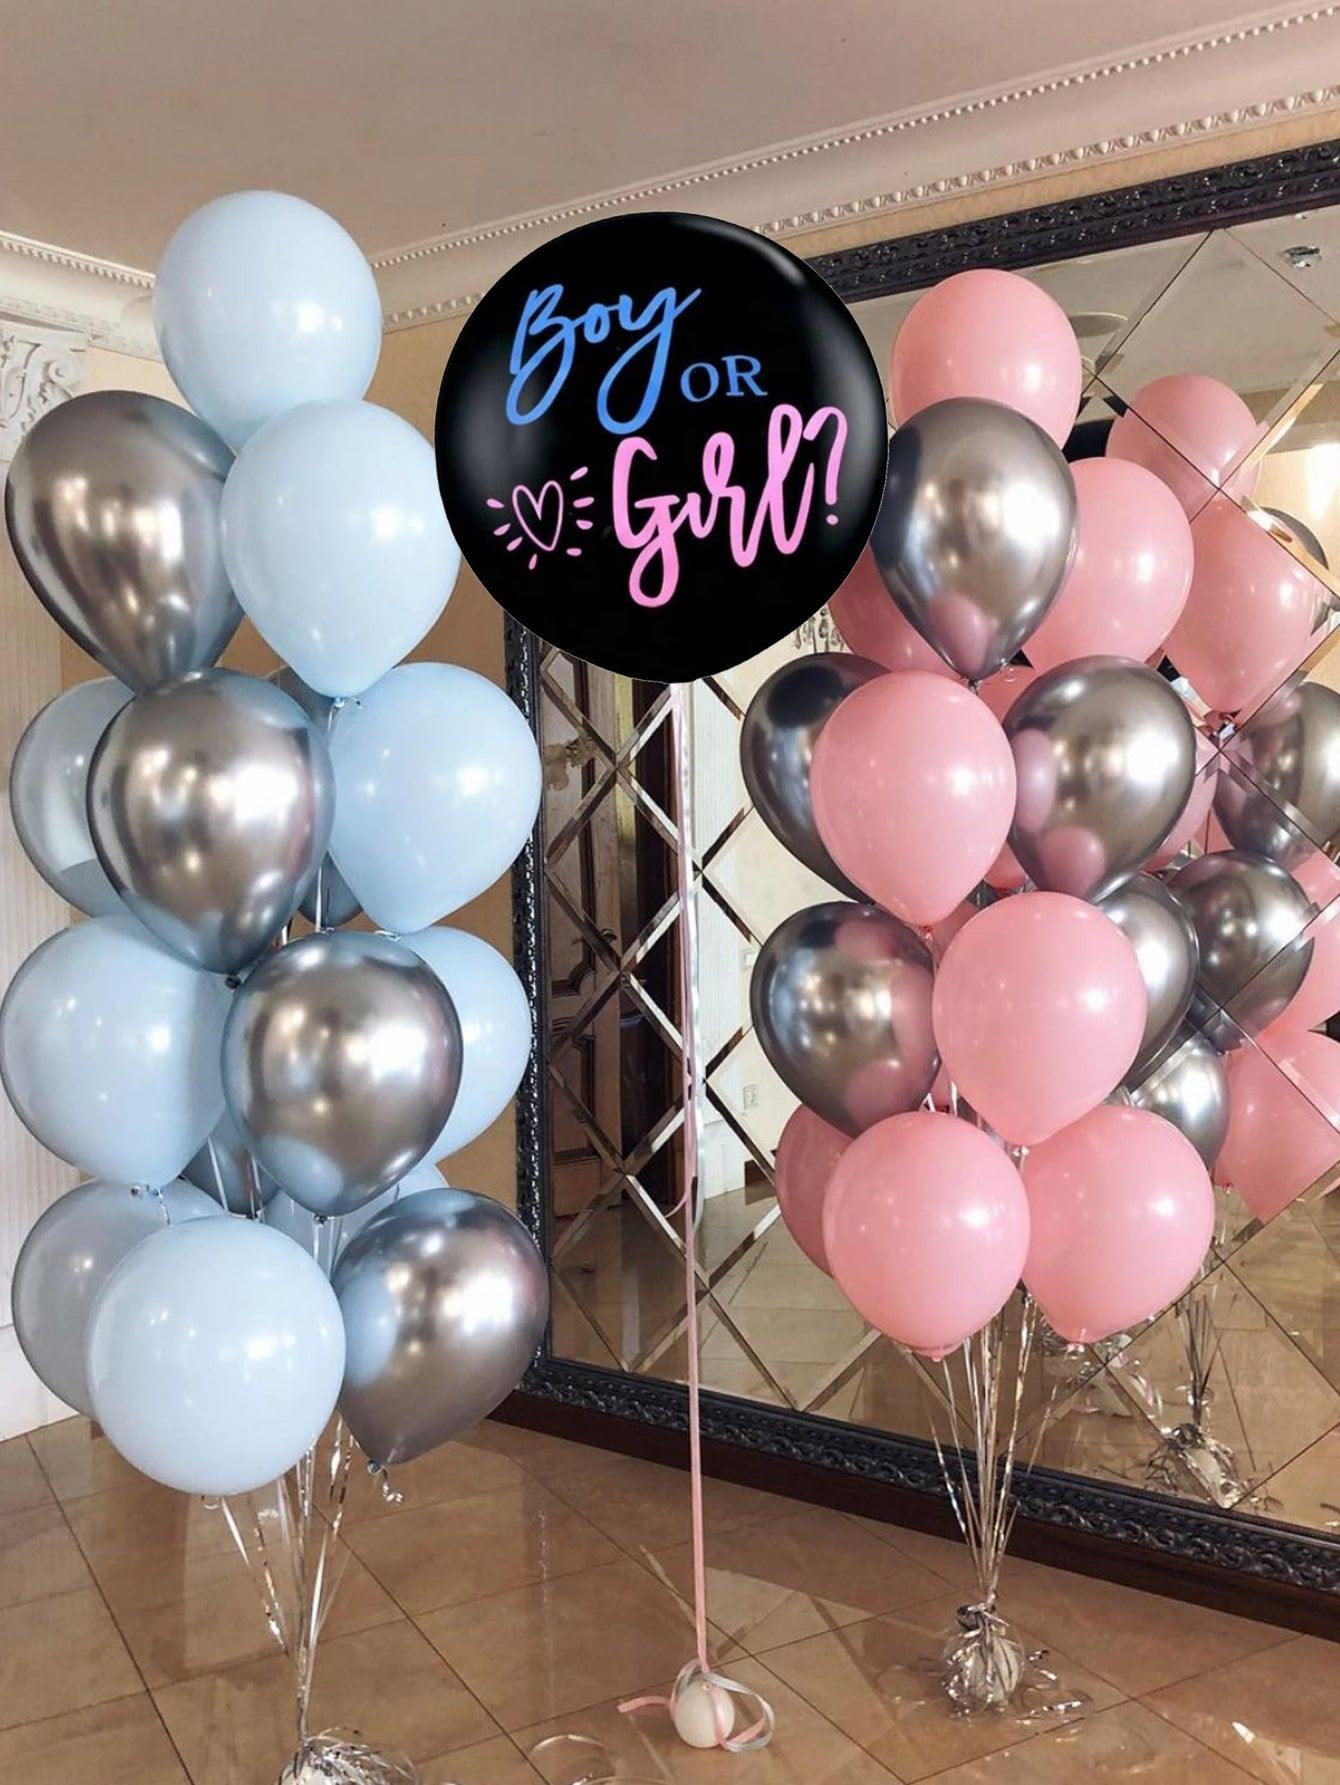 33pcs Gender Reveal Party Balloon - Decotree.co Online Shop